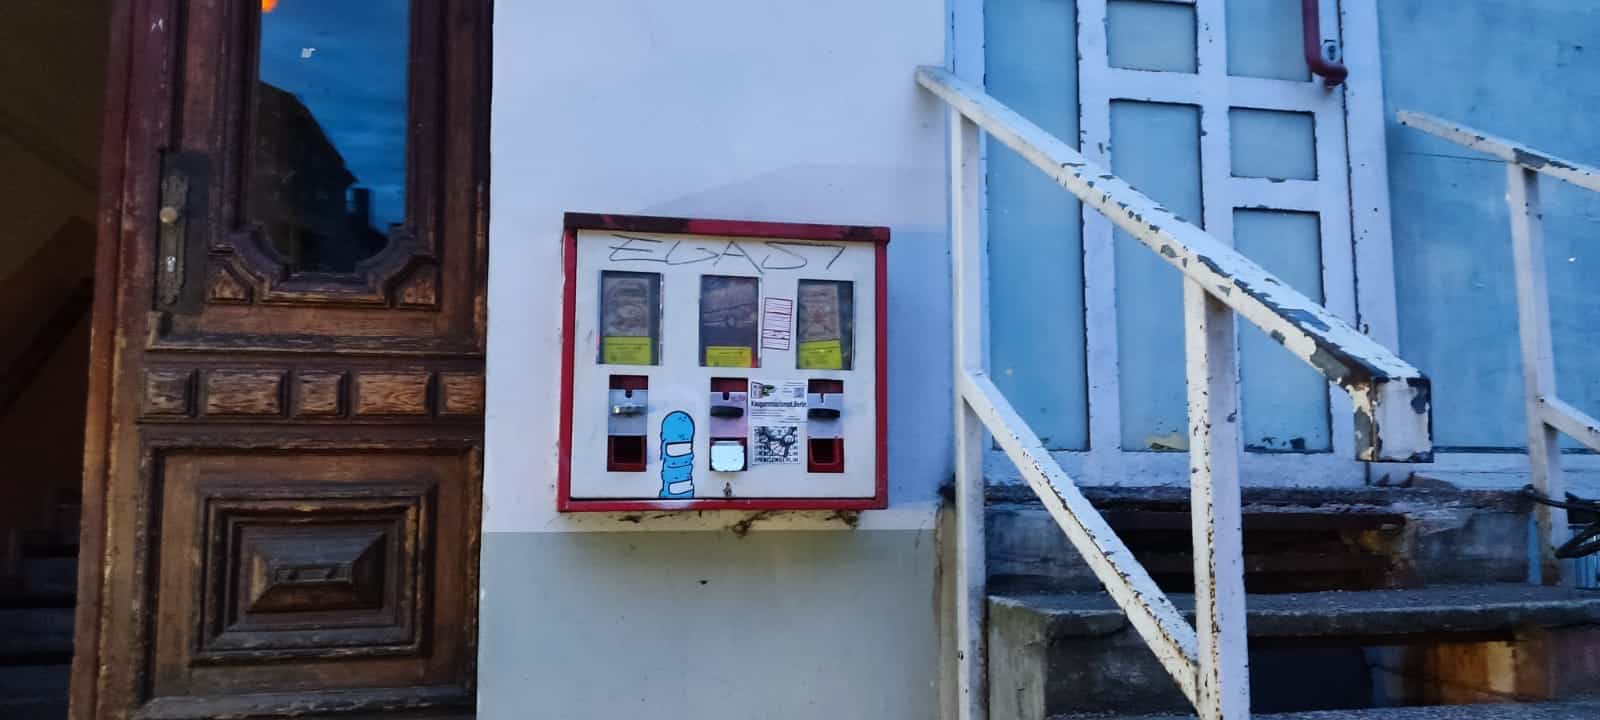 Kaugummiautomat an Hauswand neben Restaurant